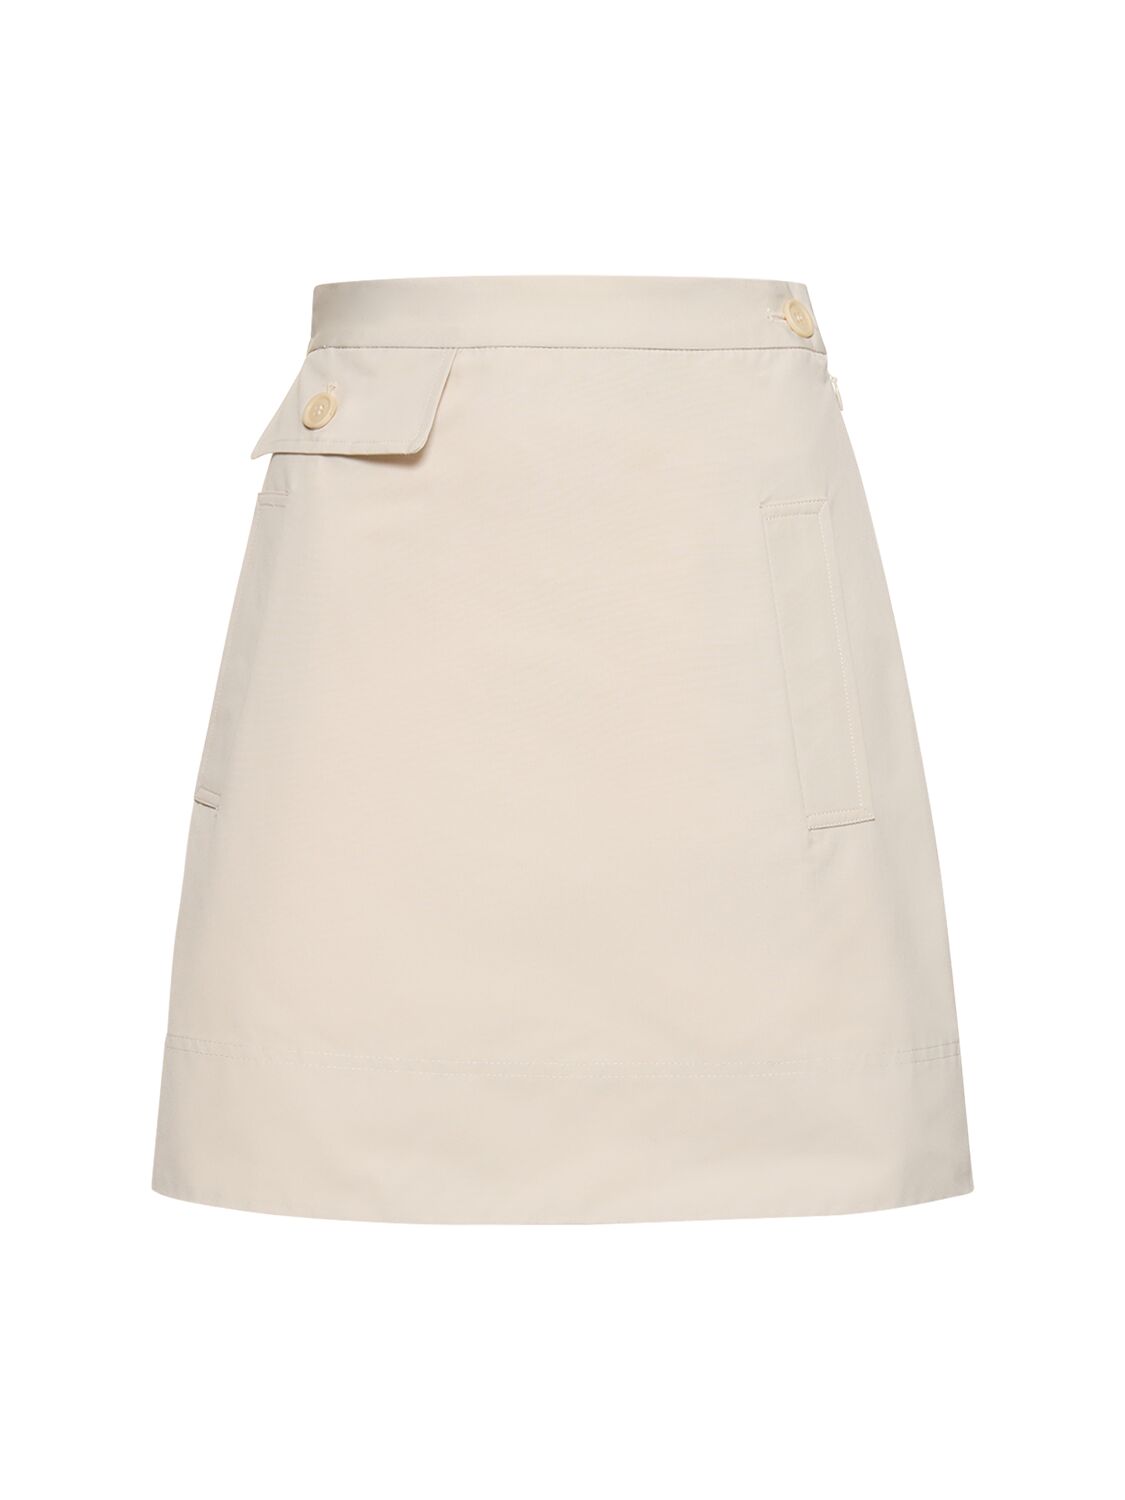 Image of Cotton Canvas Mini Skirt